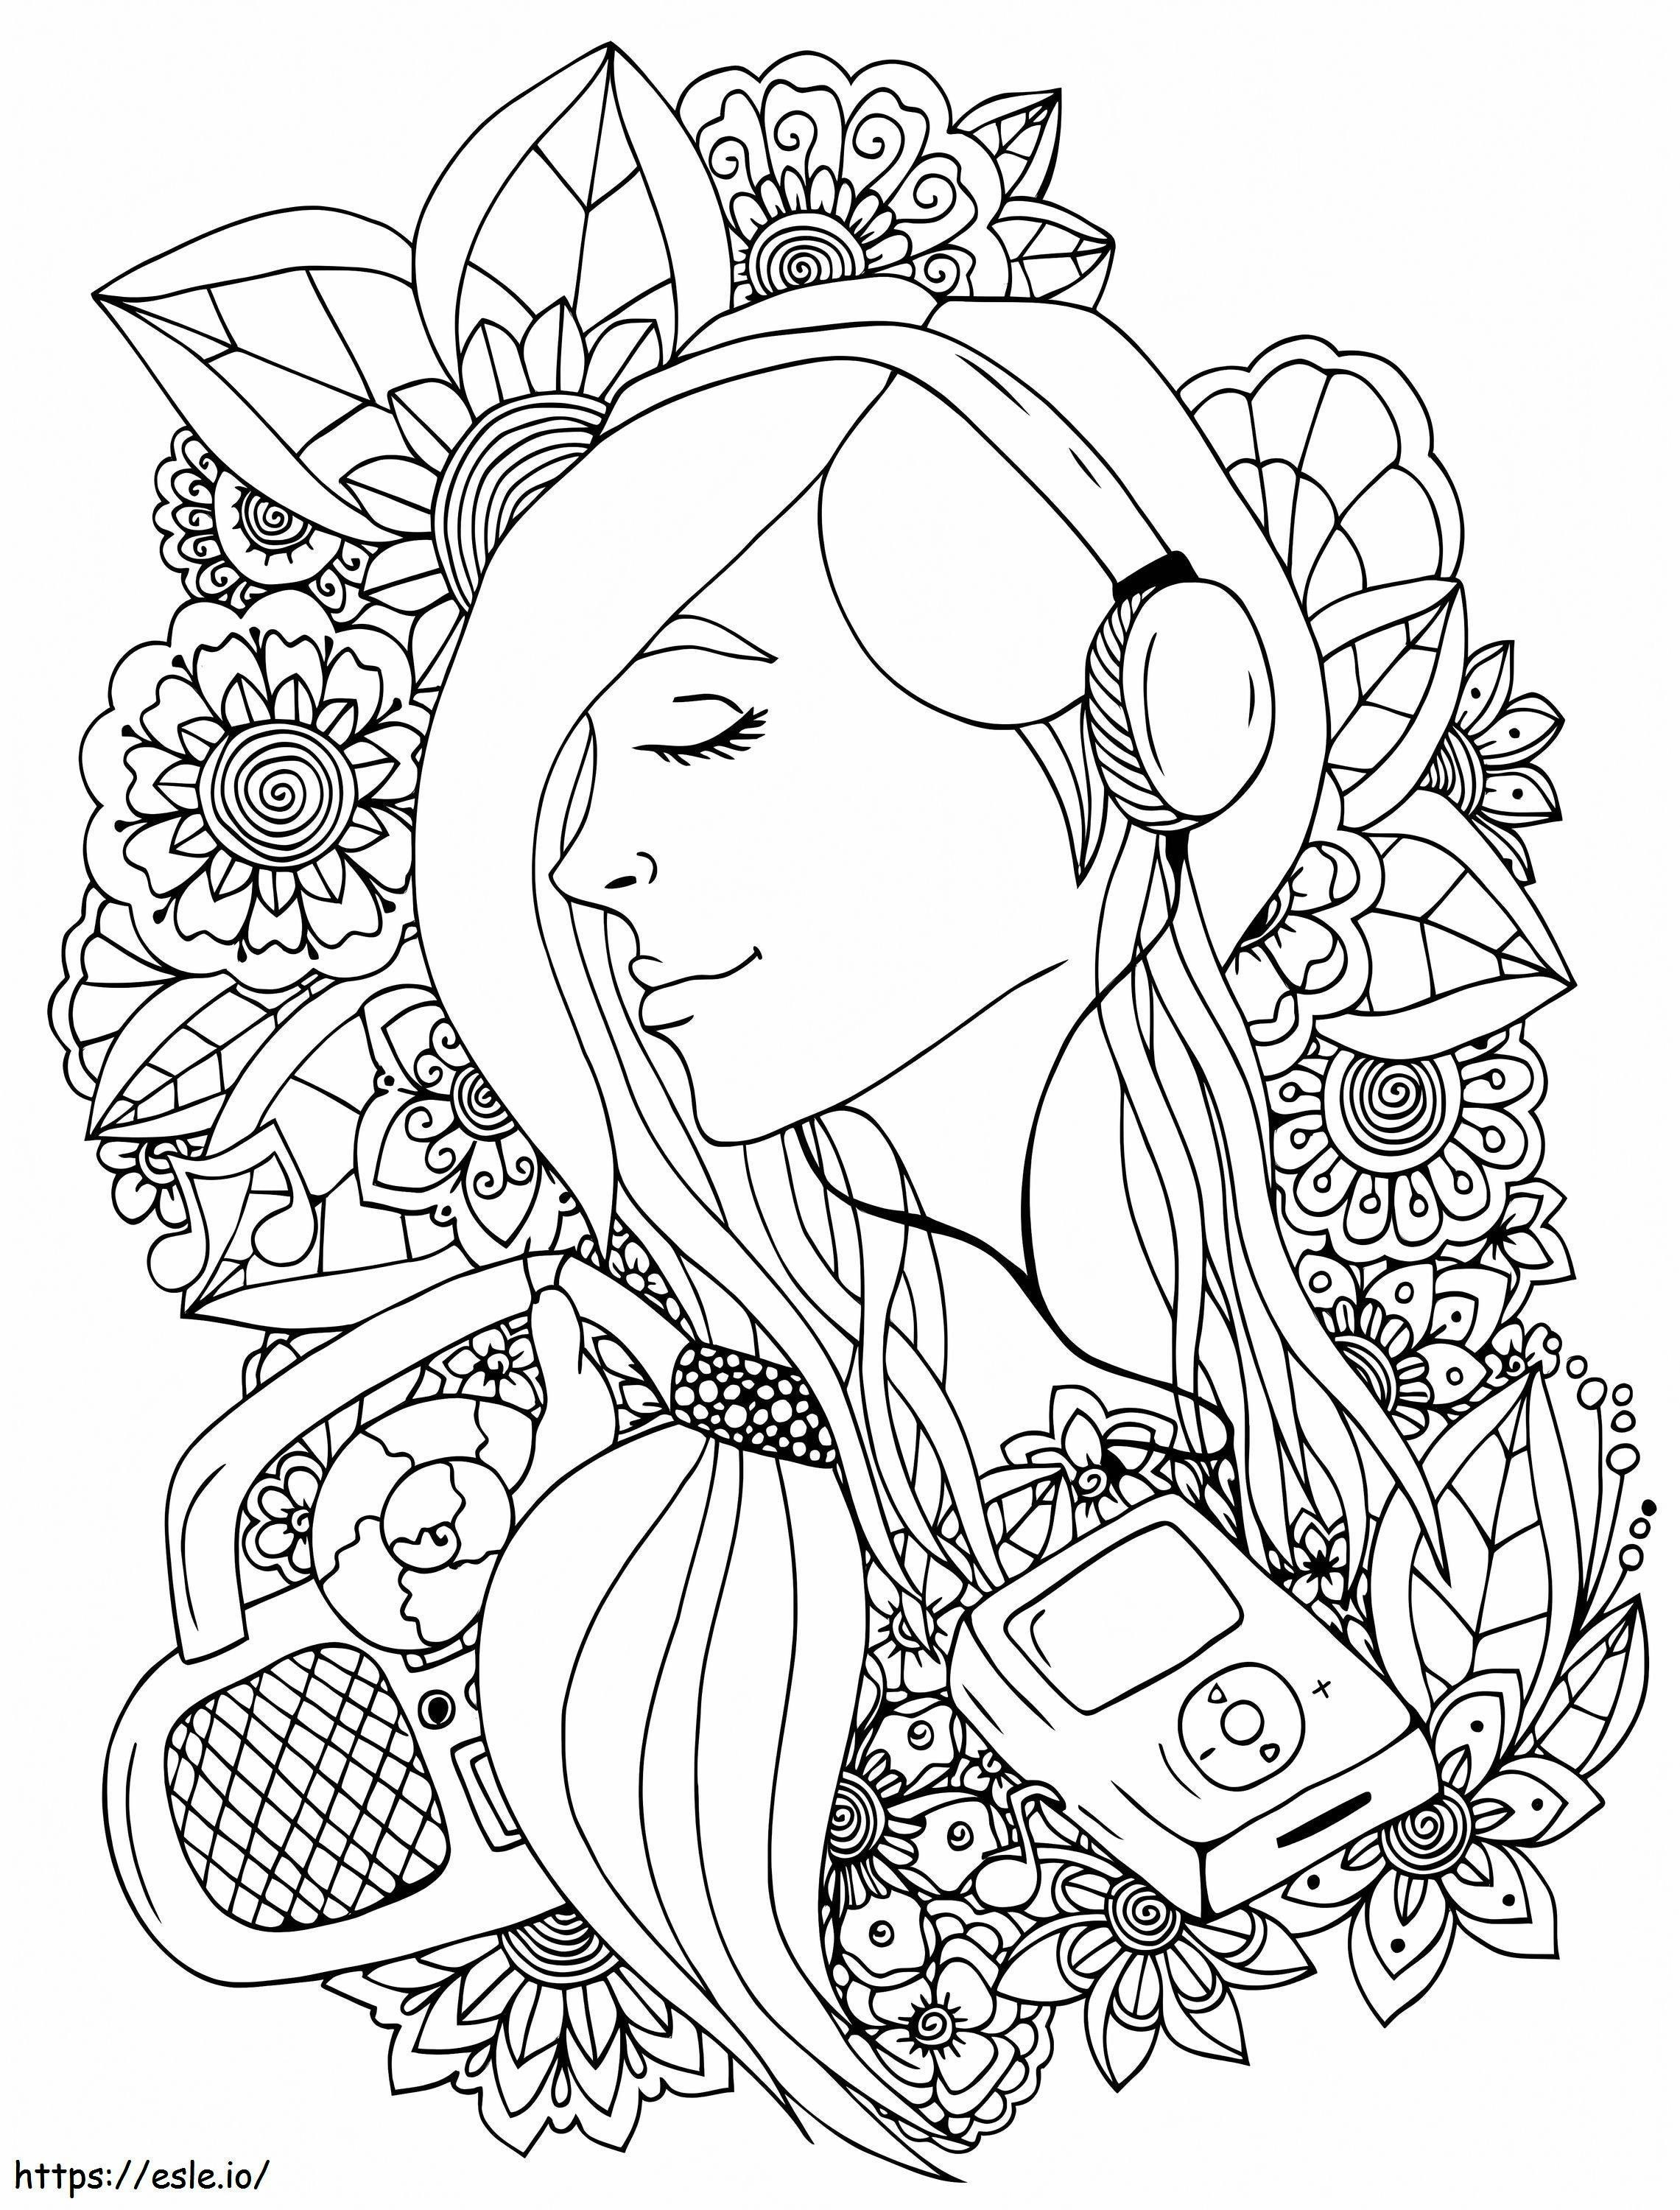 VSCO Girl Zentangle coloring page